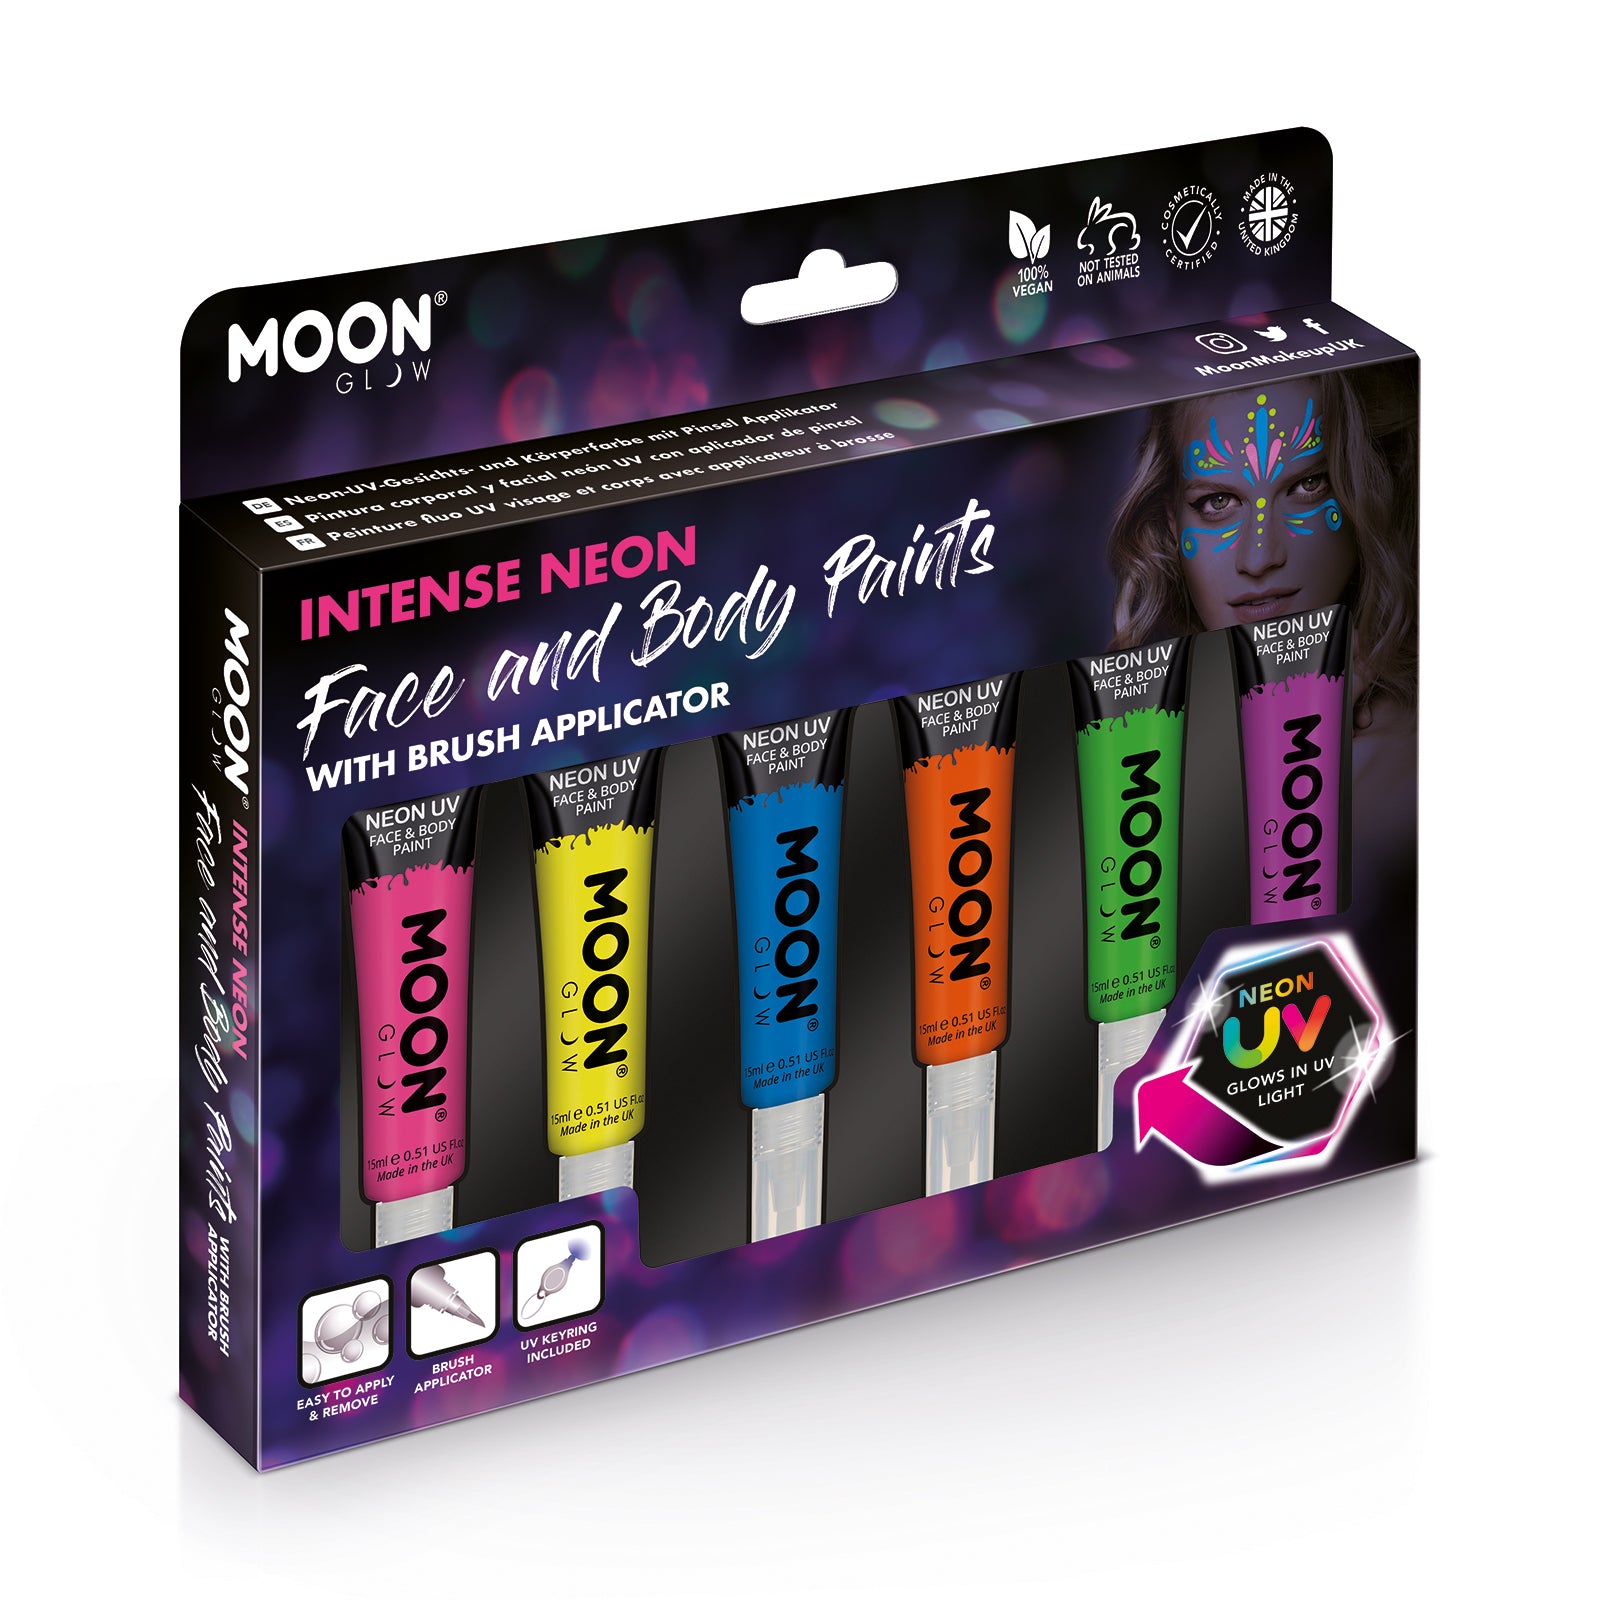 Neon UV Body & Face Paints - Glow in the dark paints